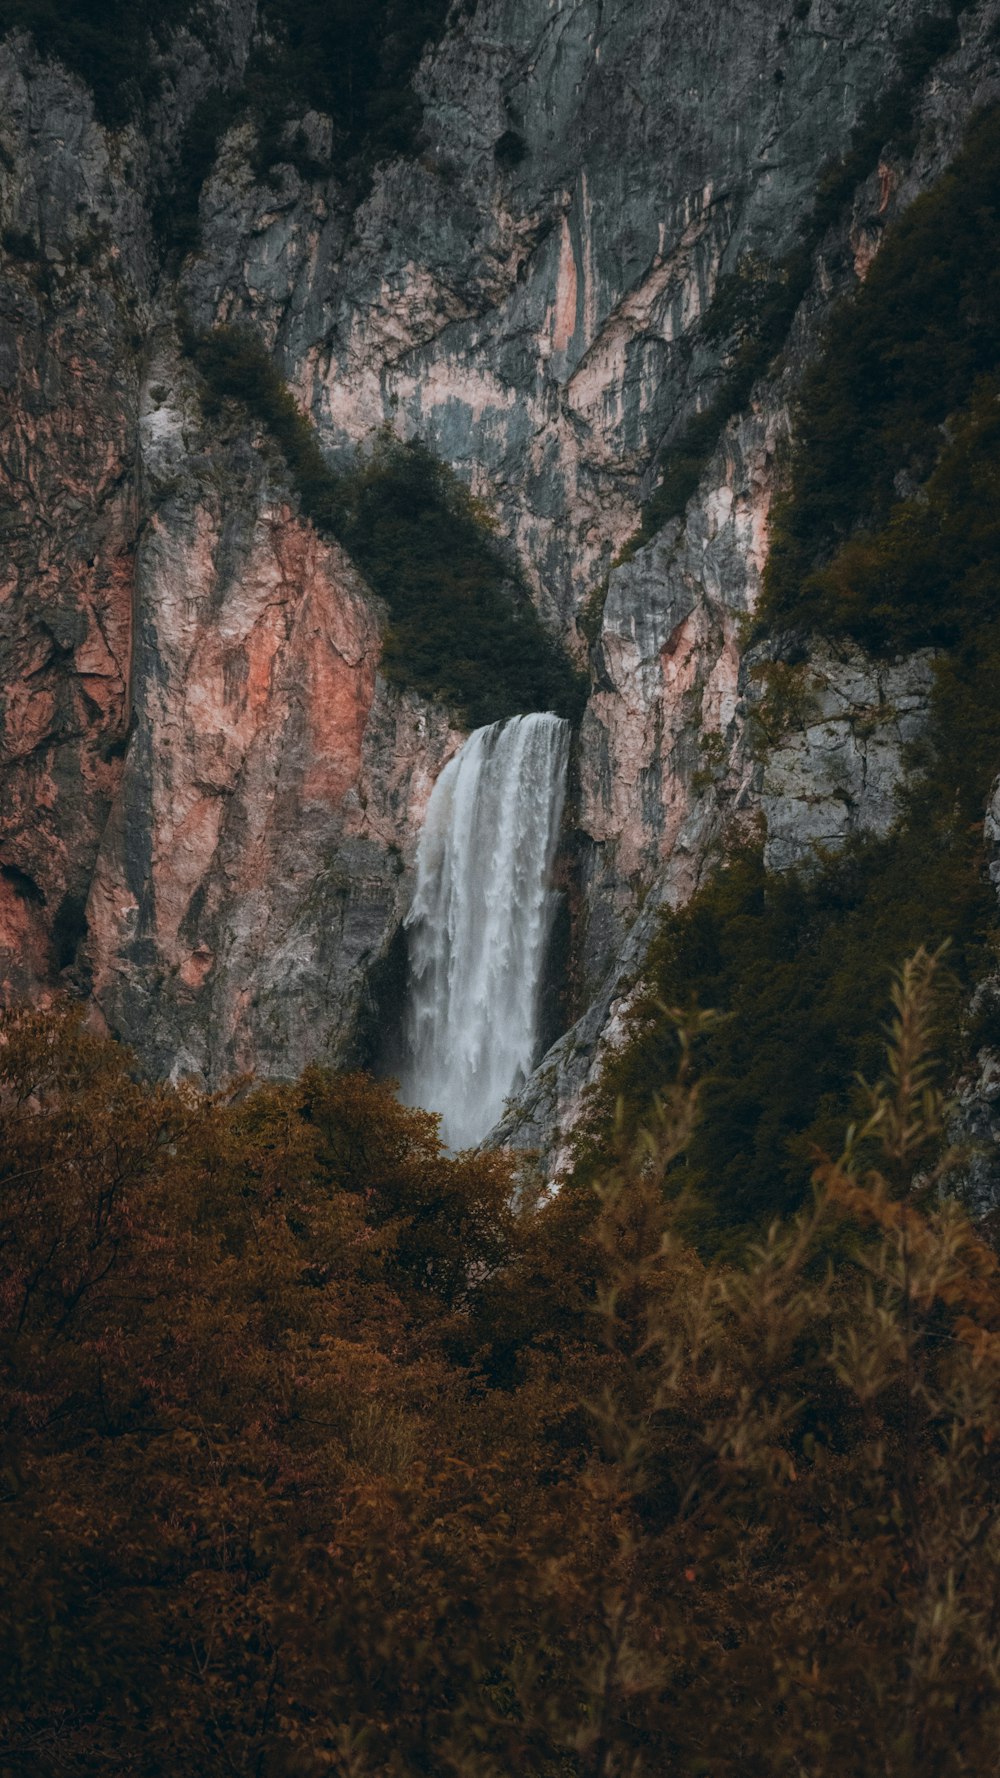 waterfalls in brown rocky mountain during daytime